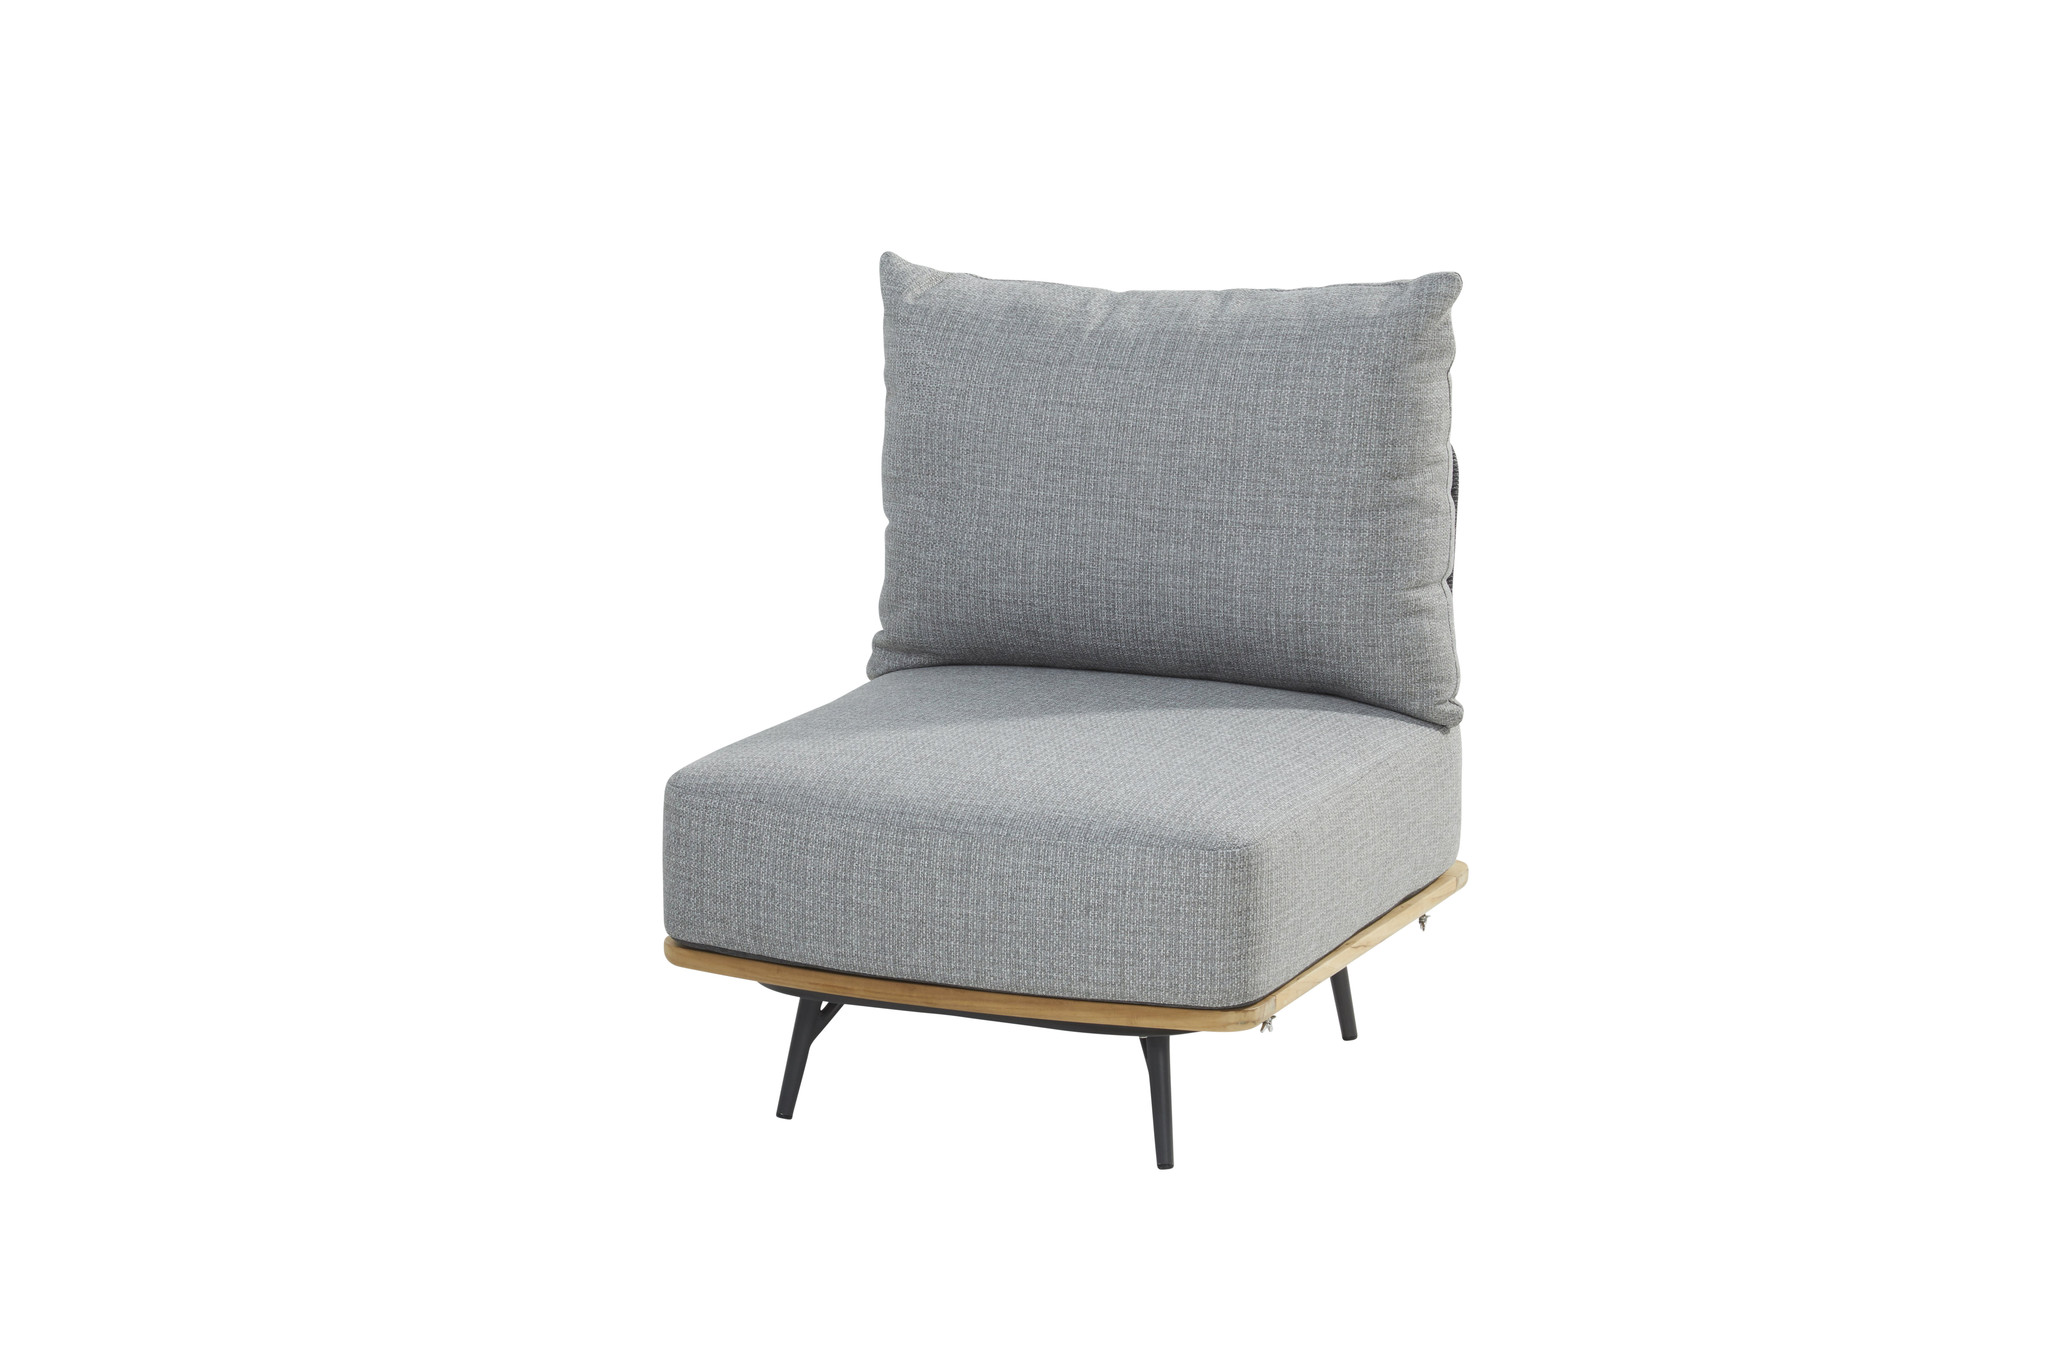 living gascylinders | | | outdoor - Outdoor mattress Positano chair 4 Seasons Springbed furniture